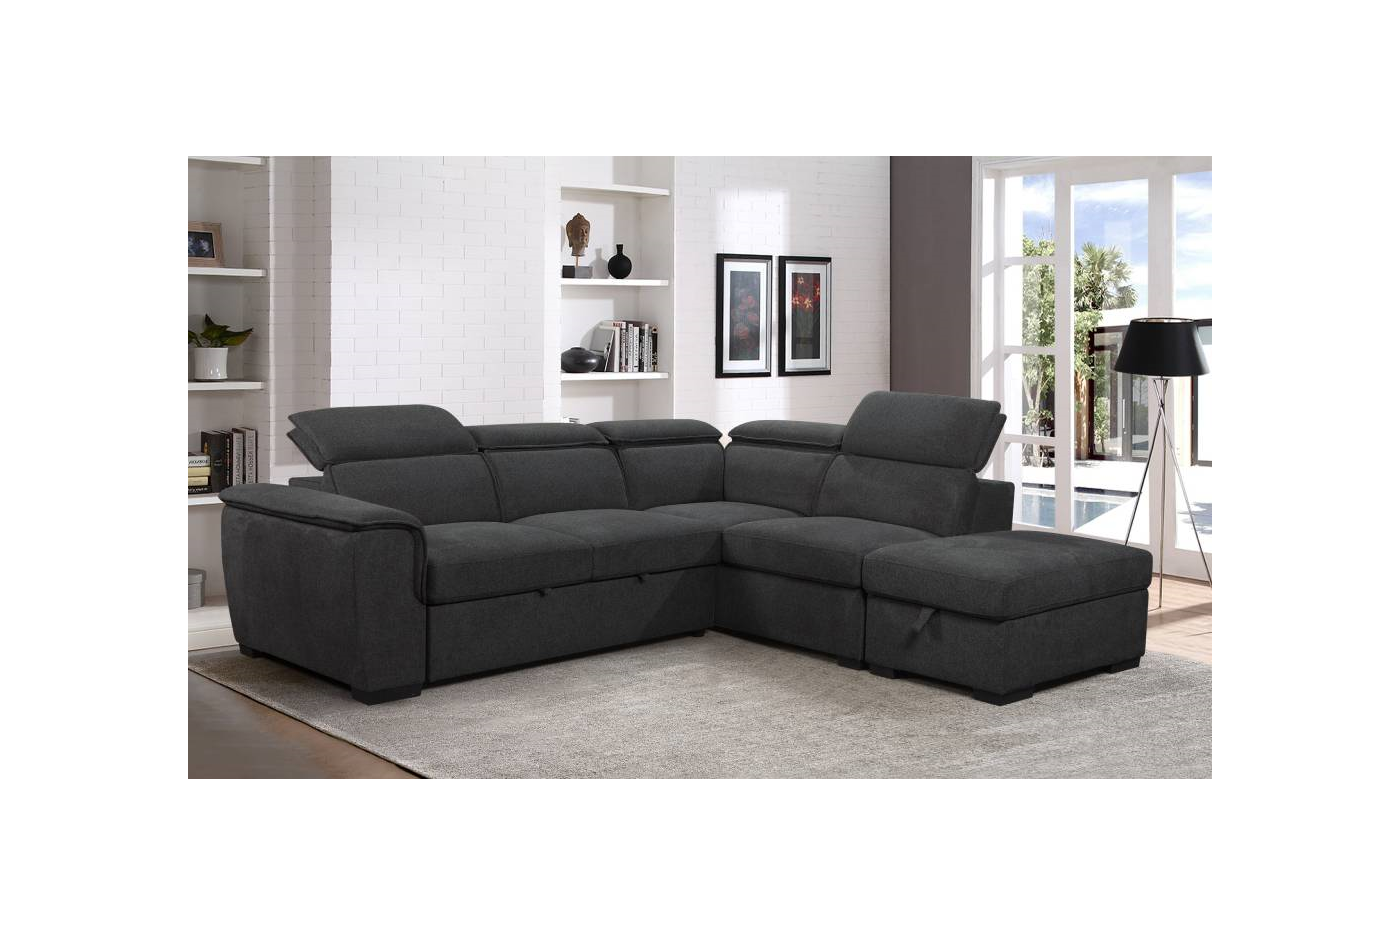 Pico Rivera Fabric Sofa Bed With Chaise - Dark Grey